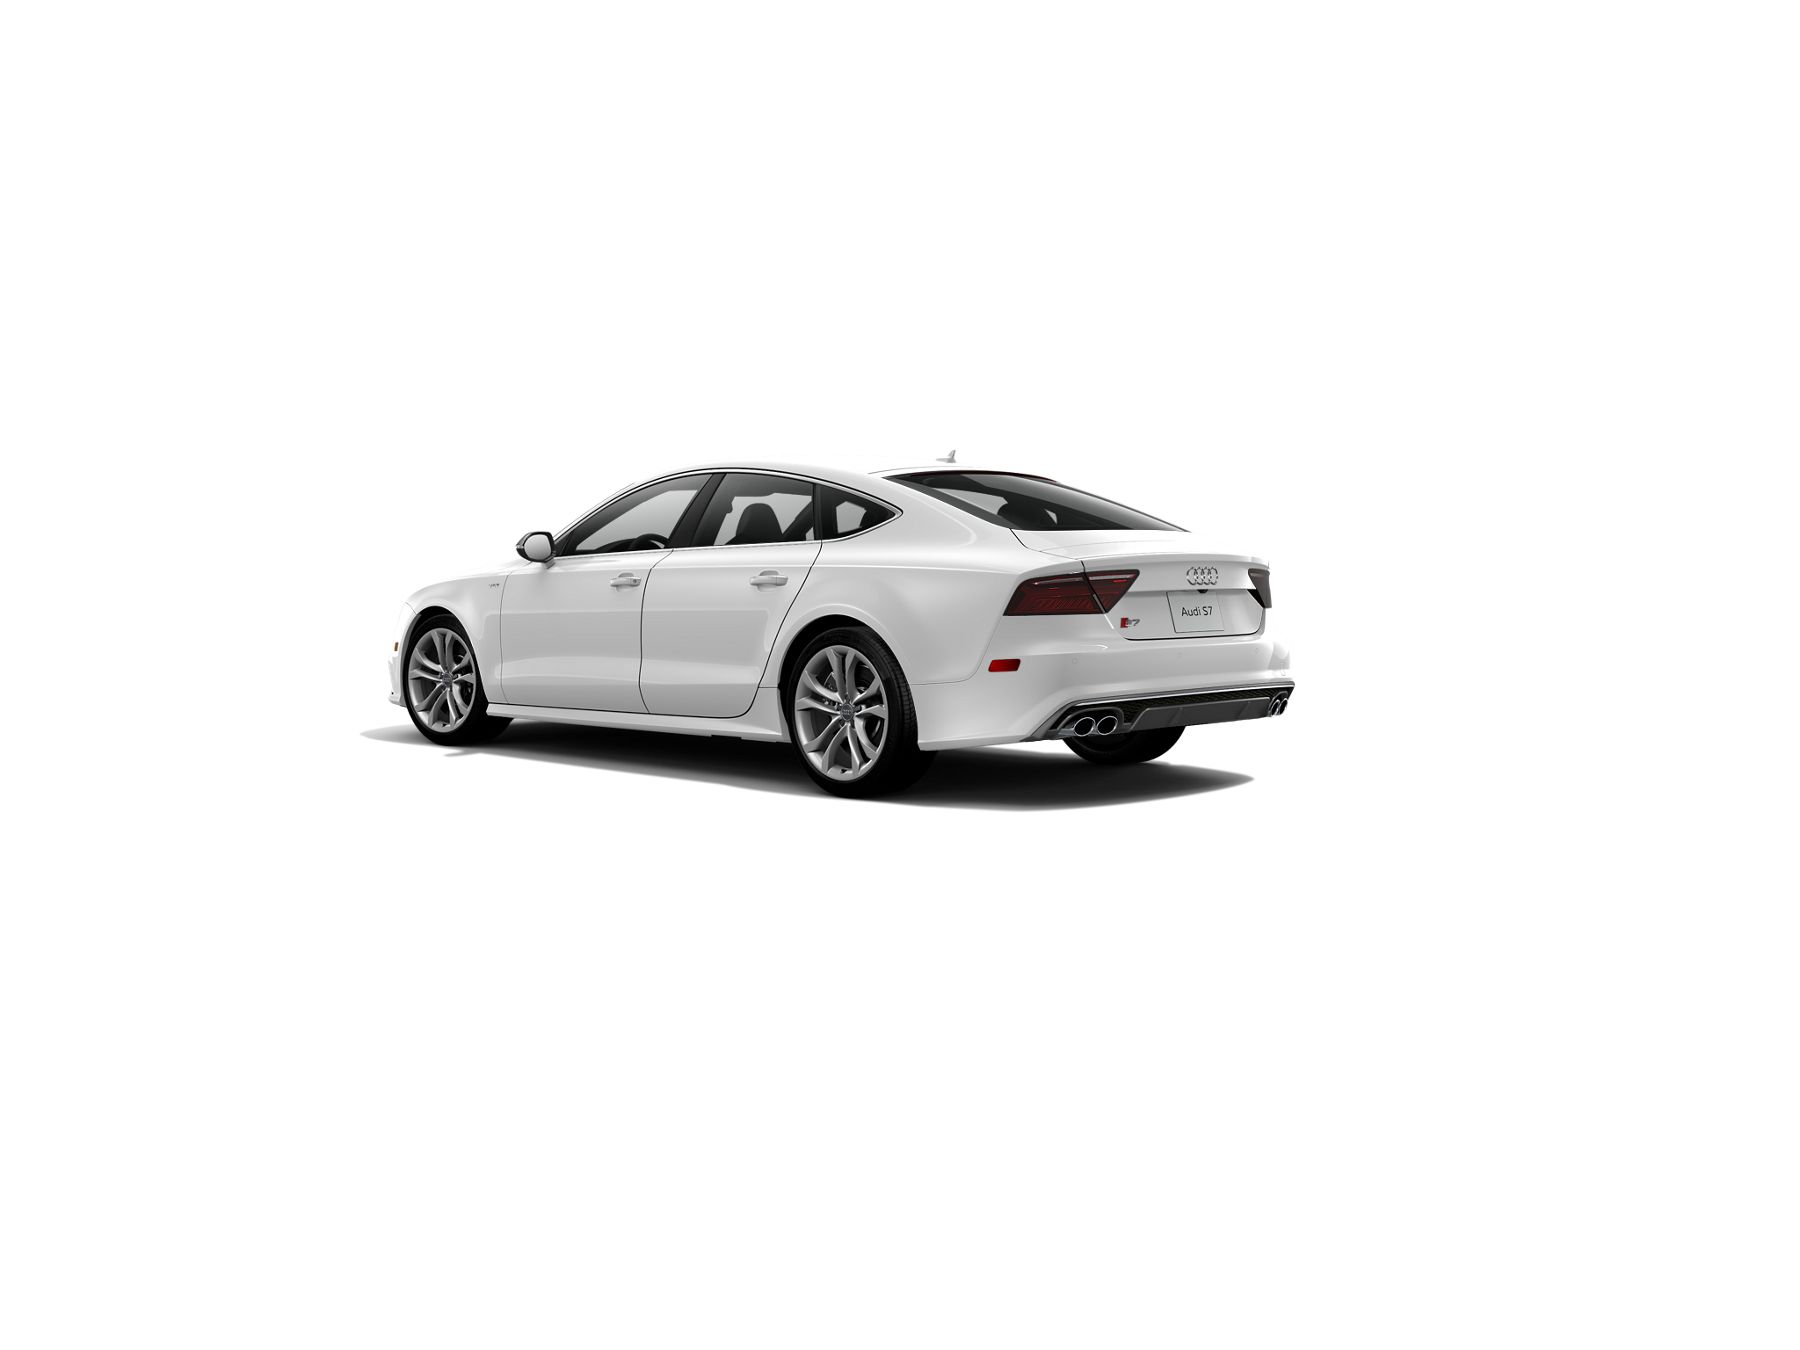 Audi S7 Premium Plus 2017 rear cross view